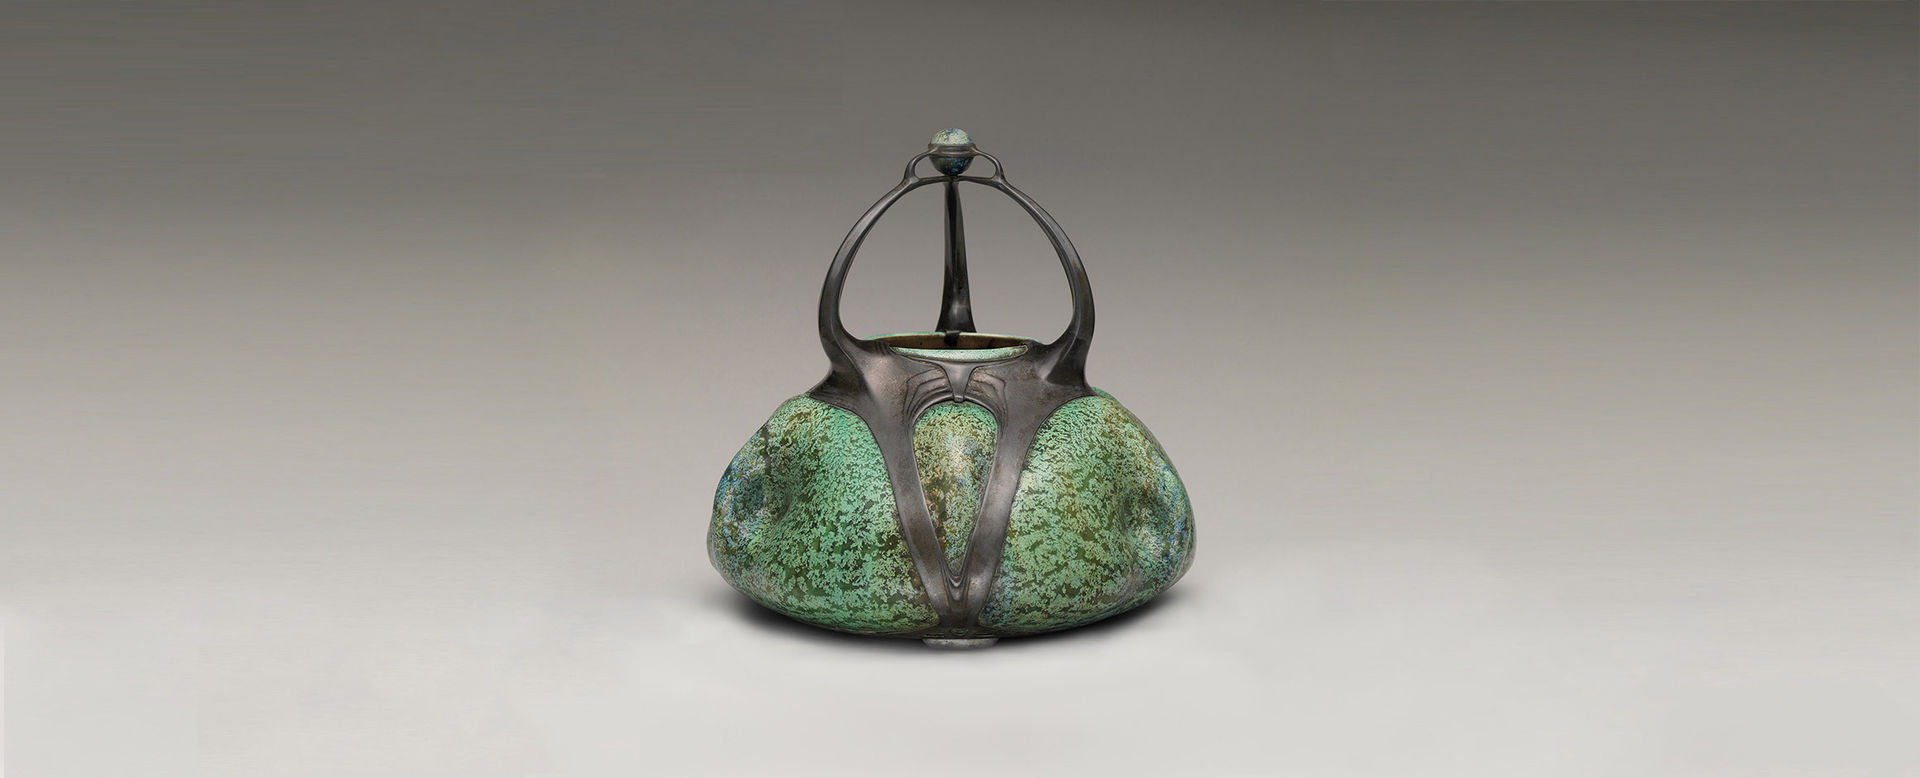 A green tea pot kettle against a grey background